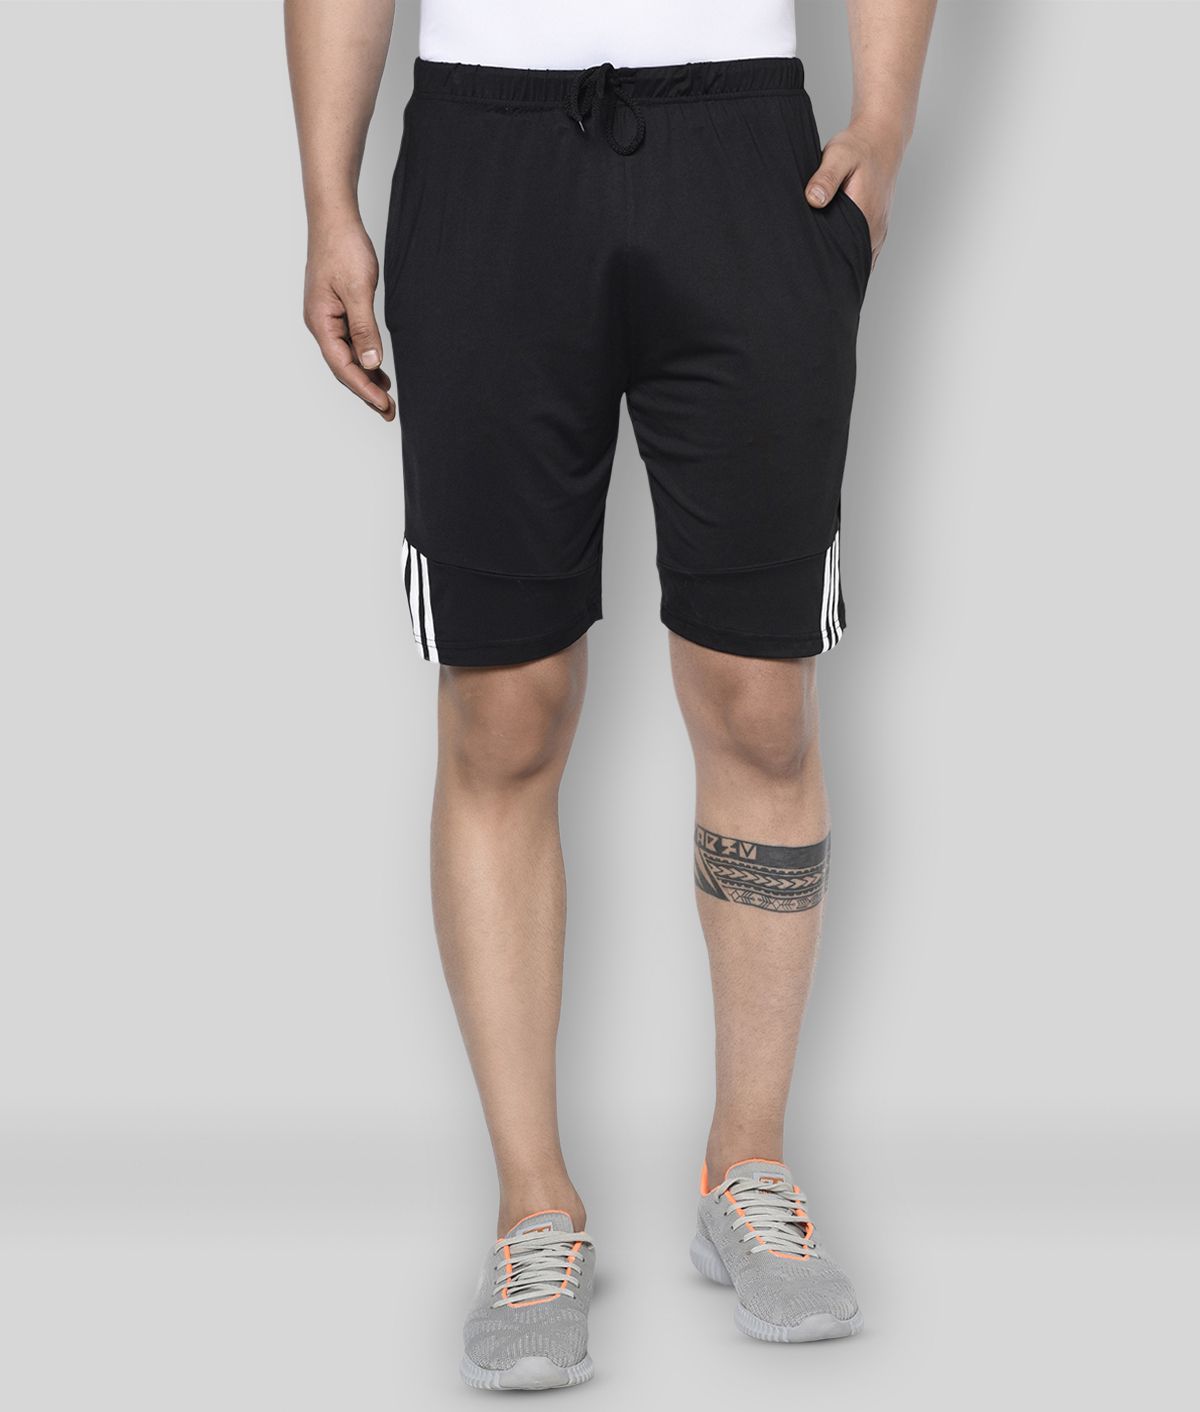     			Glito - Black Polyester Men's Shorts ( Pack of 1 )